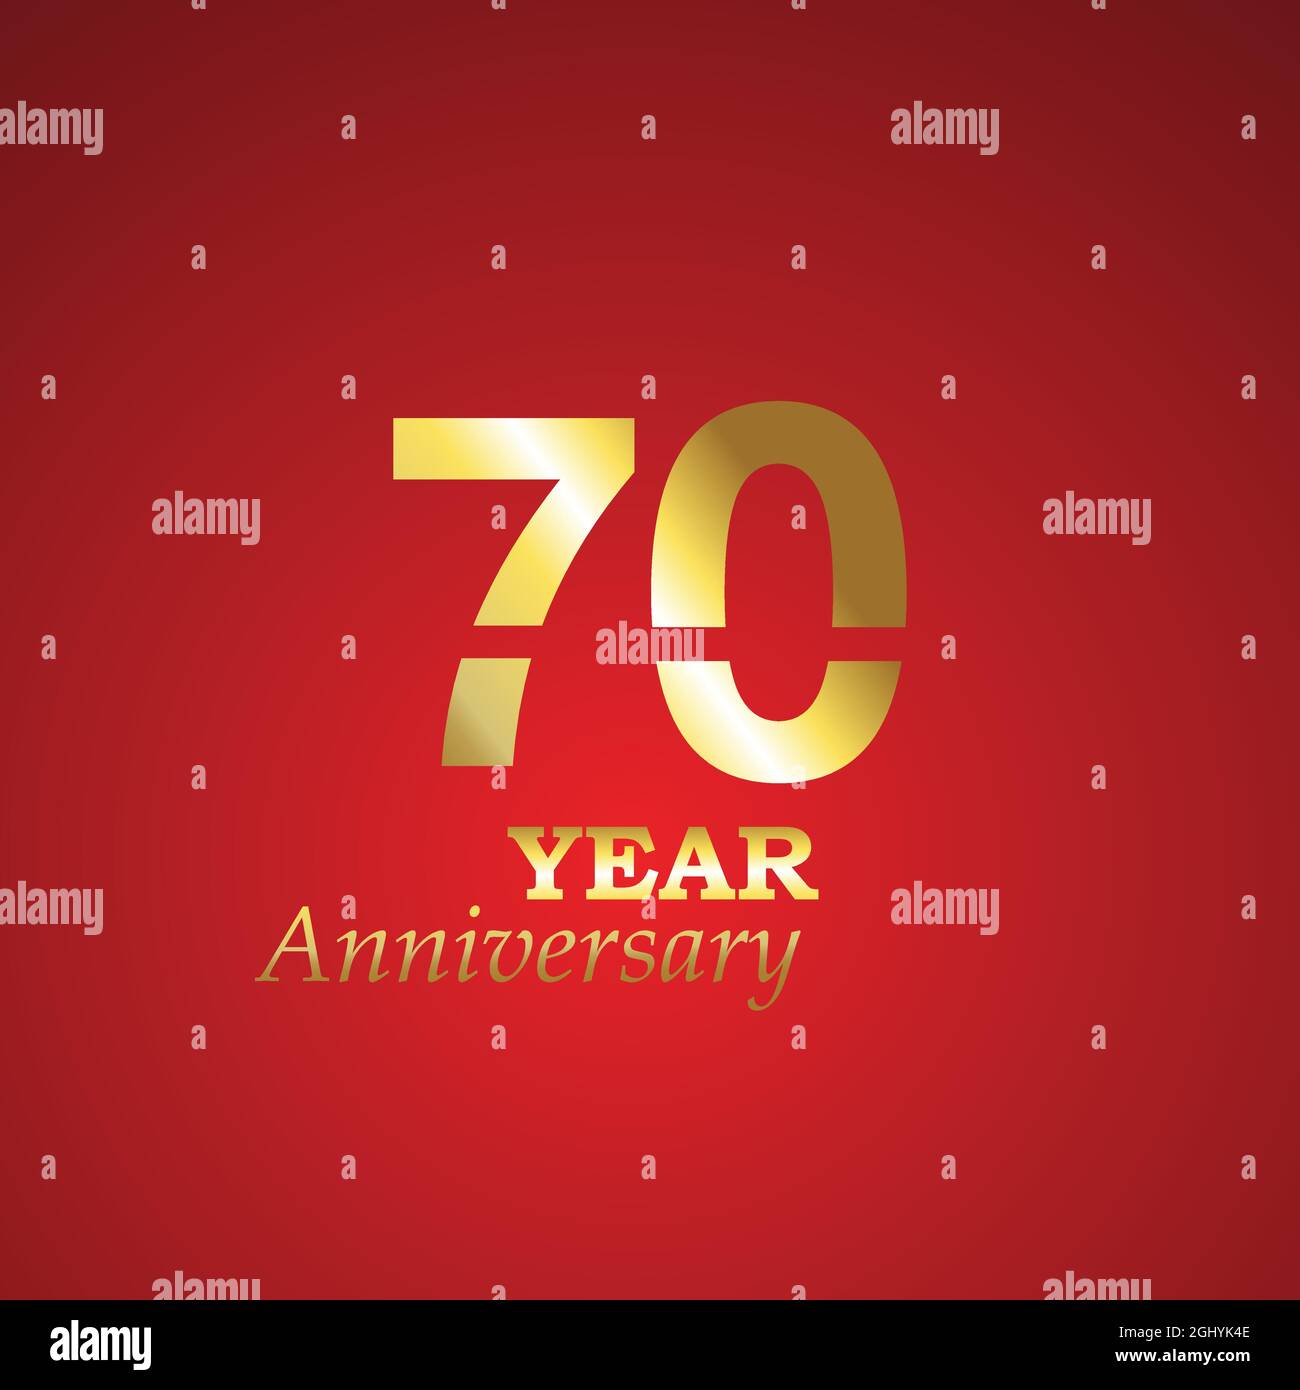 70 Year Anniversary Logo Vector Template Design Illustration Stock Vector